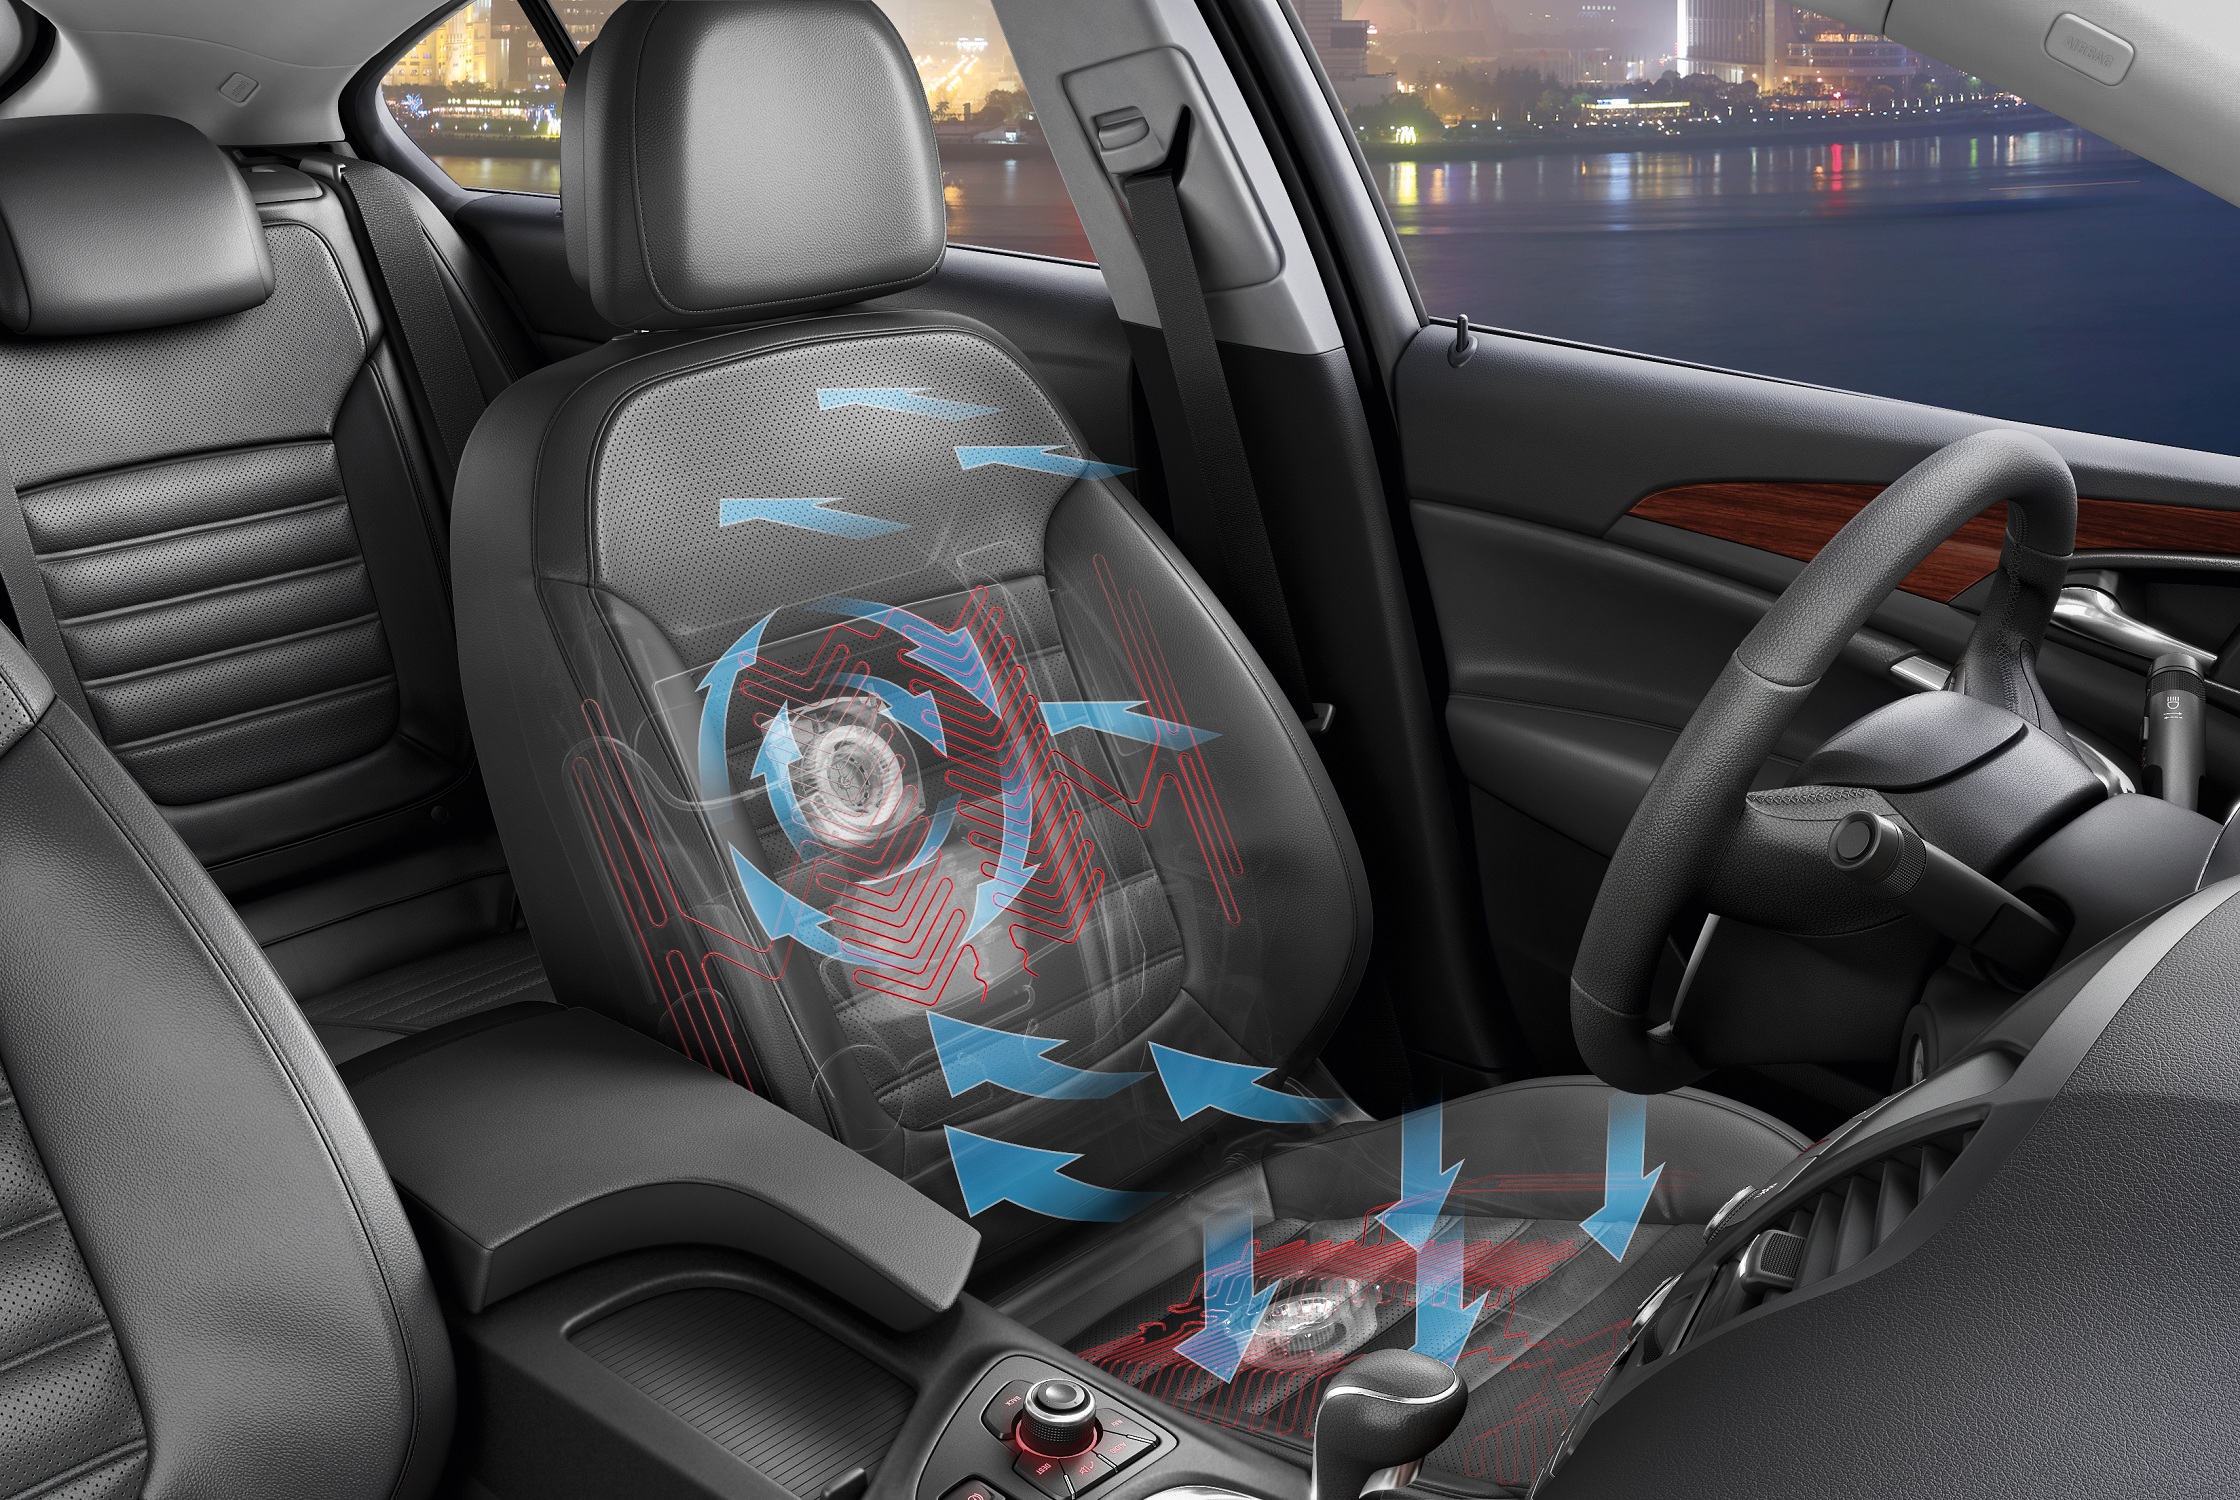 Opel Insignia seat's ventilation system